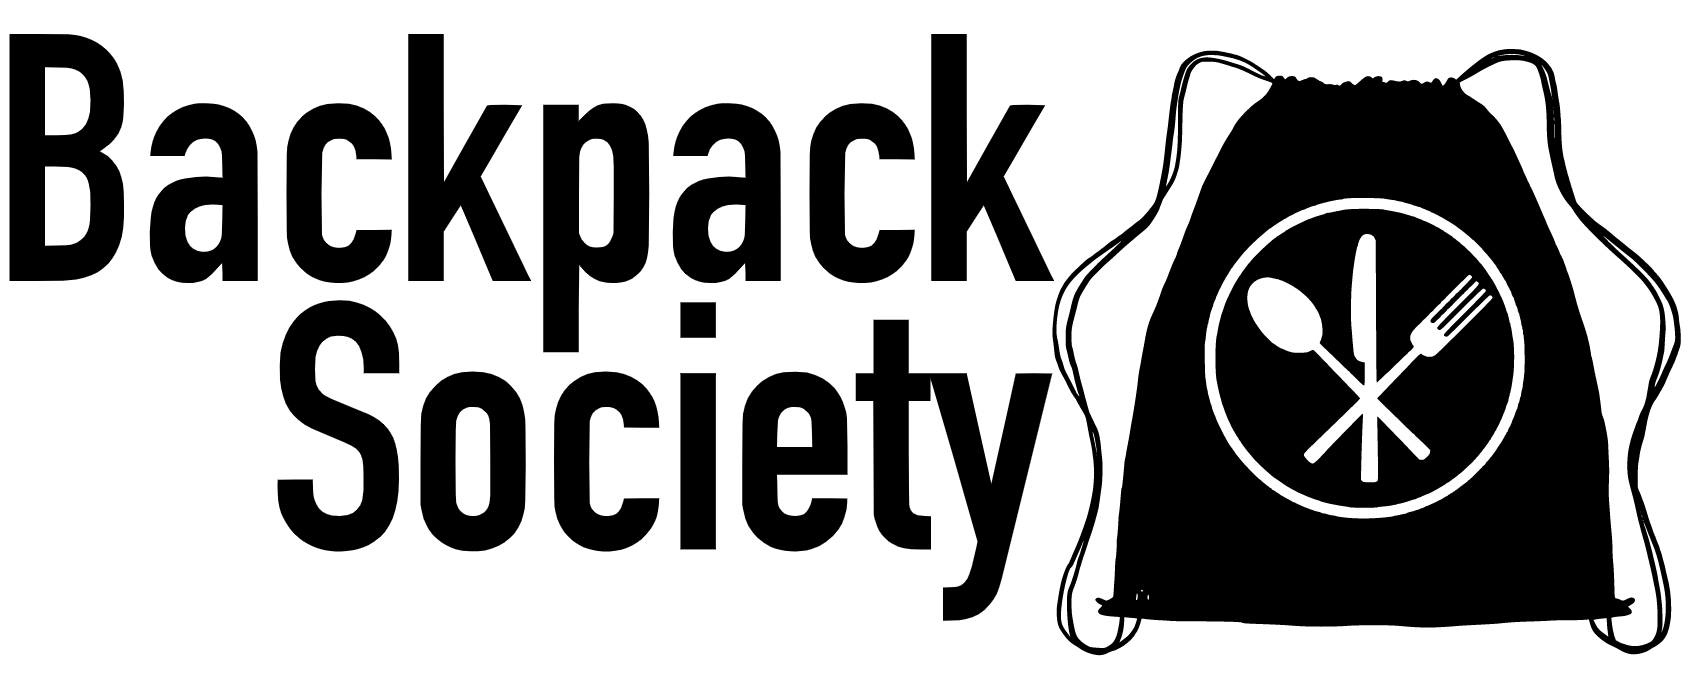 Backpack Society